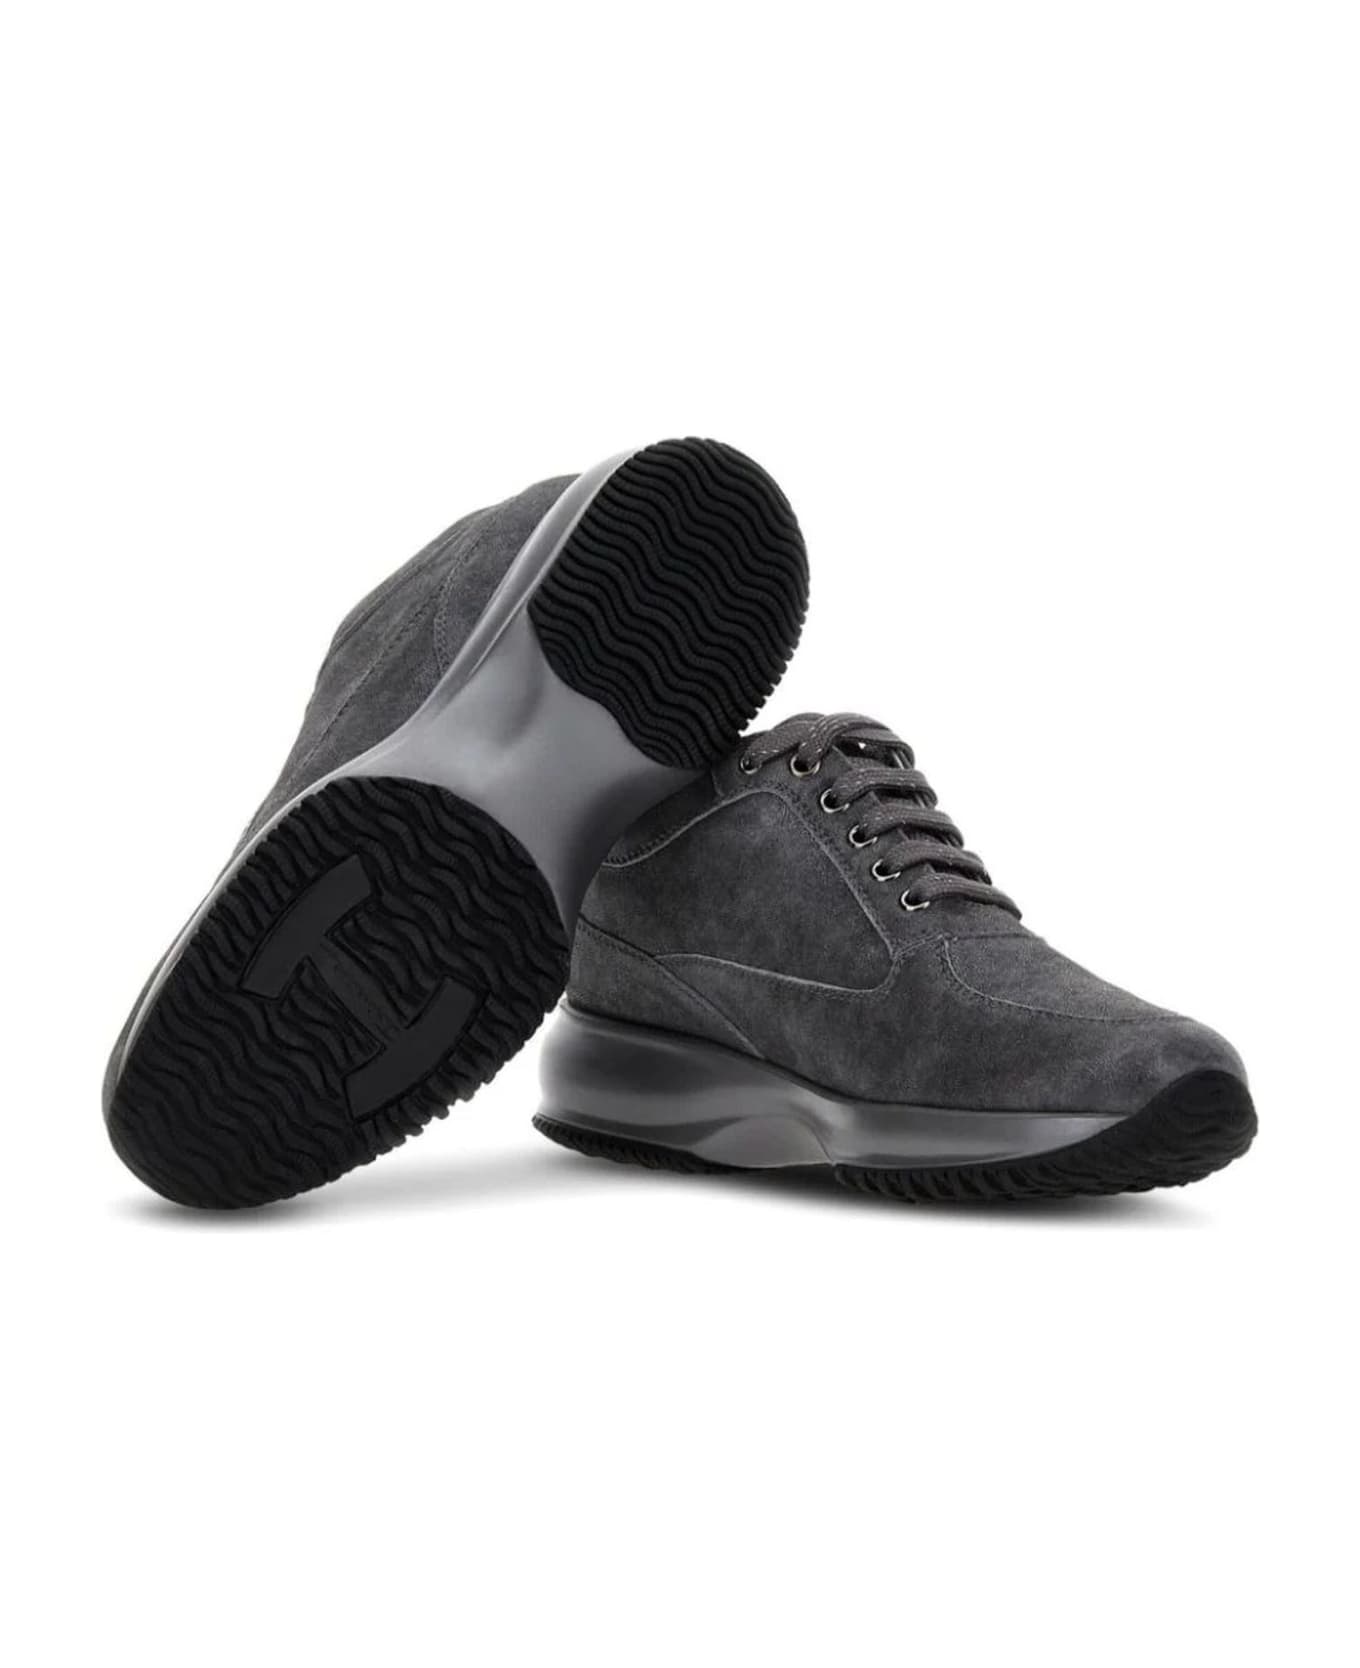 Hogan Interactive Sneakers - Grey